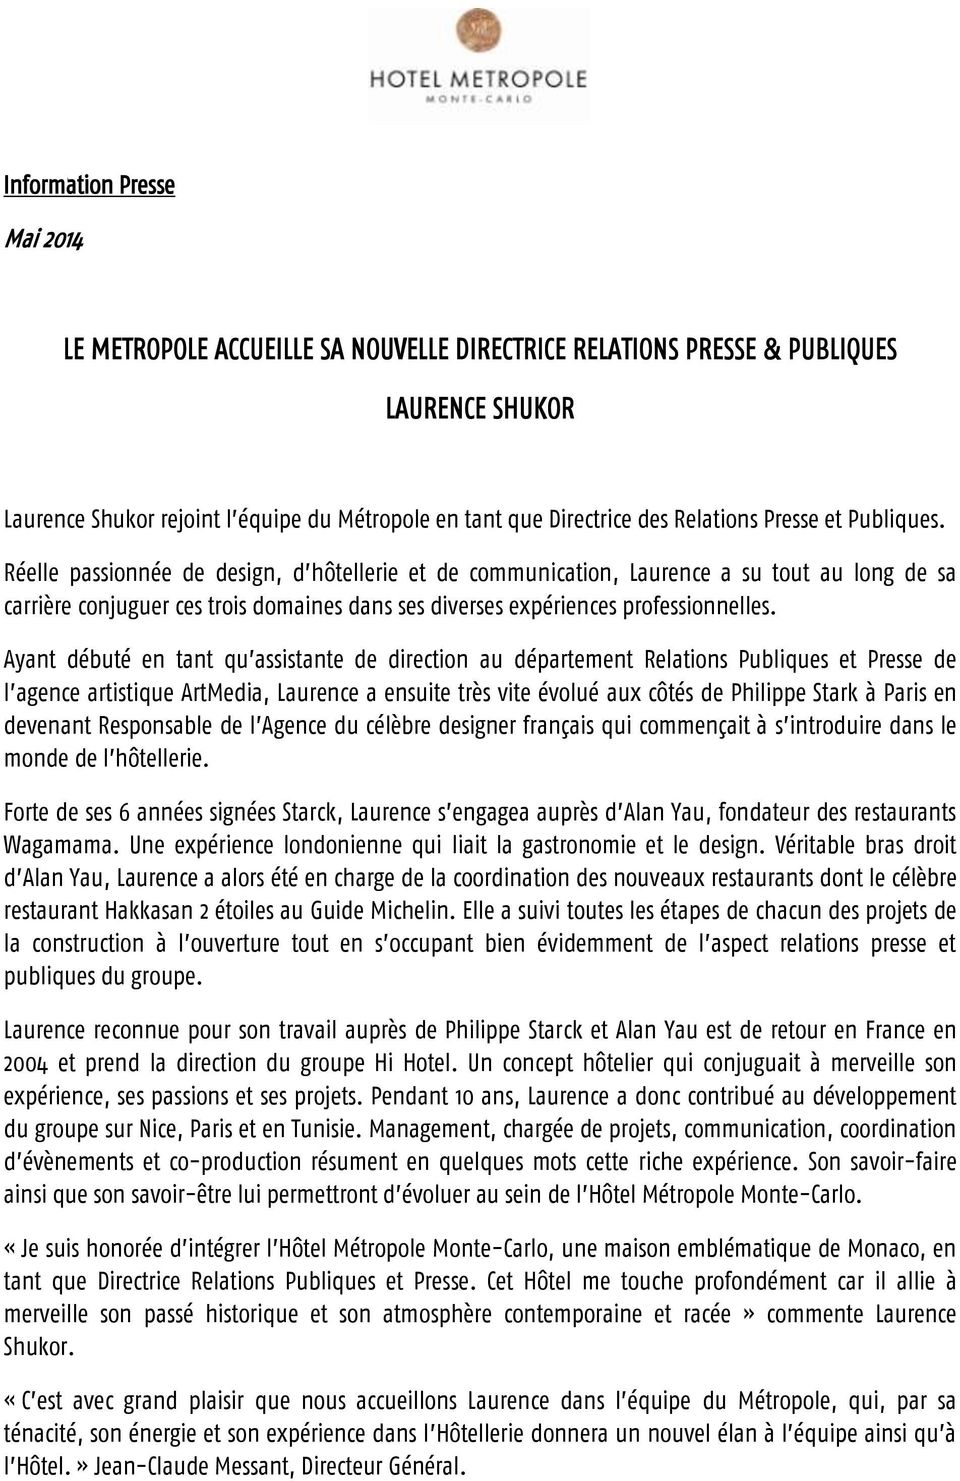 Le Metropole Accueille Sa Nouvelle Directrice Relations Presse Publiques Laurence Shukor Mai Information Presse Pdf Free Download